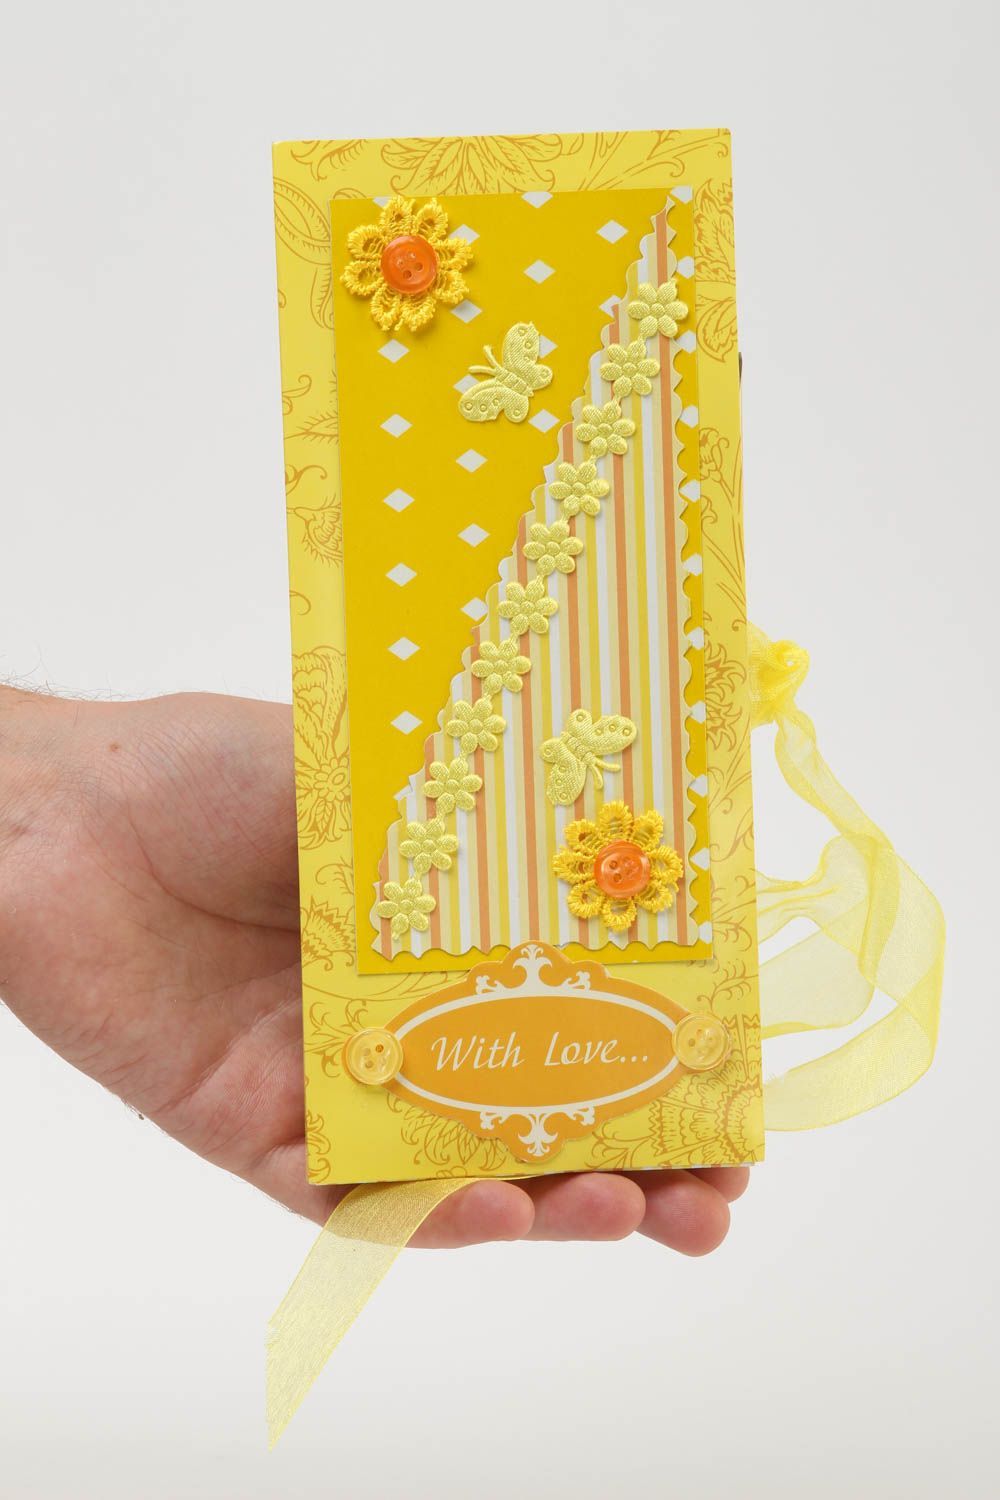 Handmade schöne Grusskarten Scrapbook Karten Papier Karten rechteckig gelb foto 5